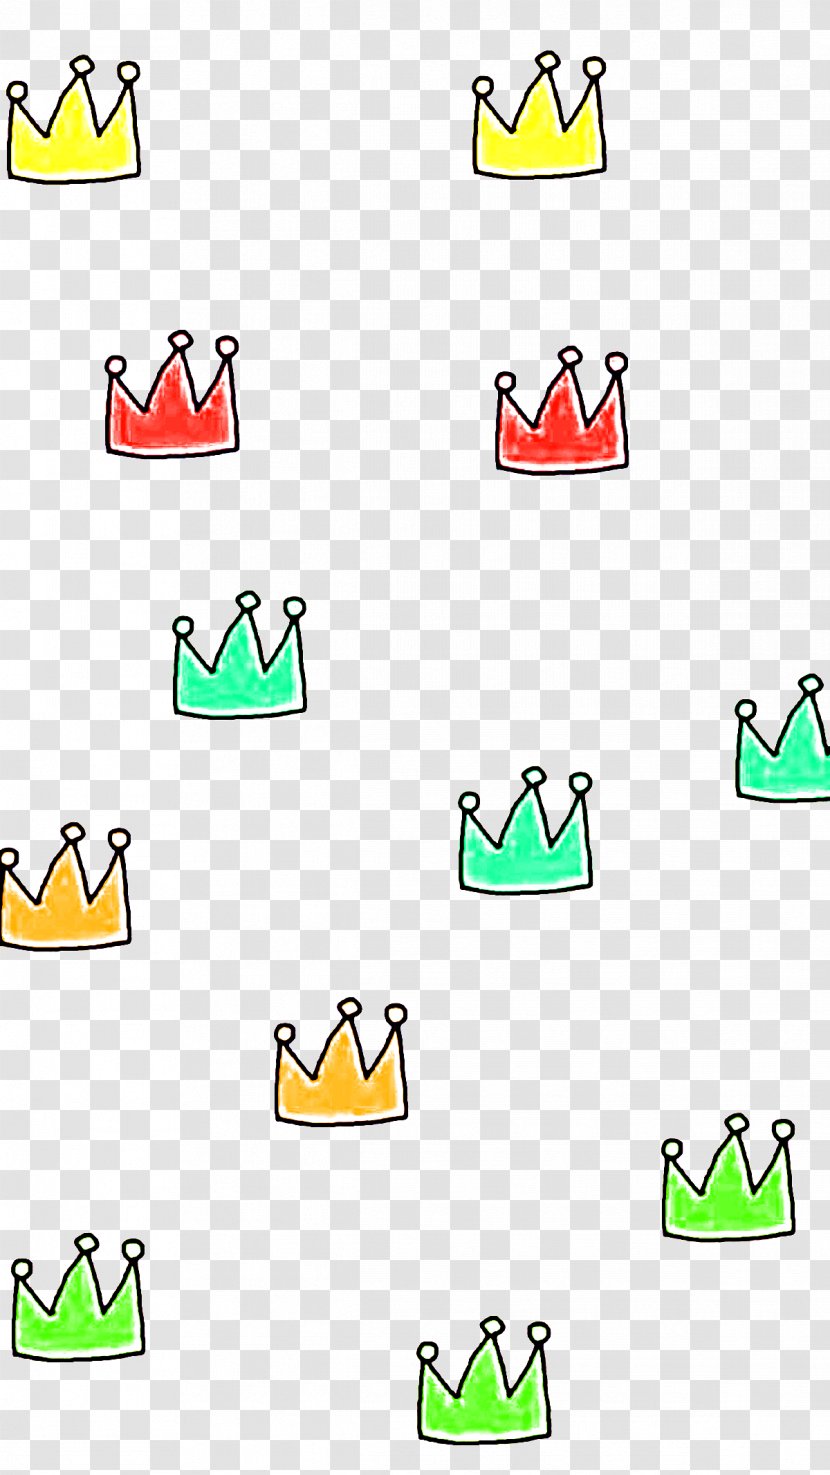 Crown Queen Regnant - Color Picture Material Transparent PNG